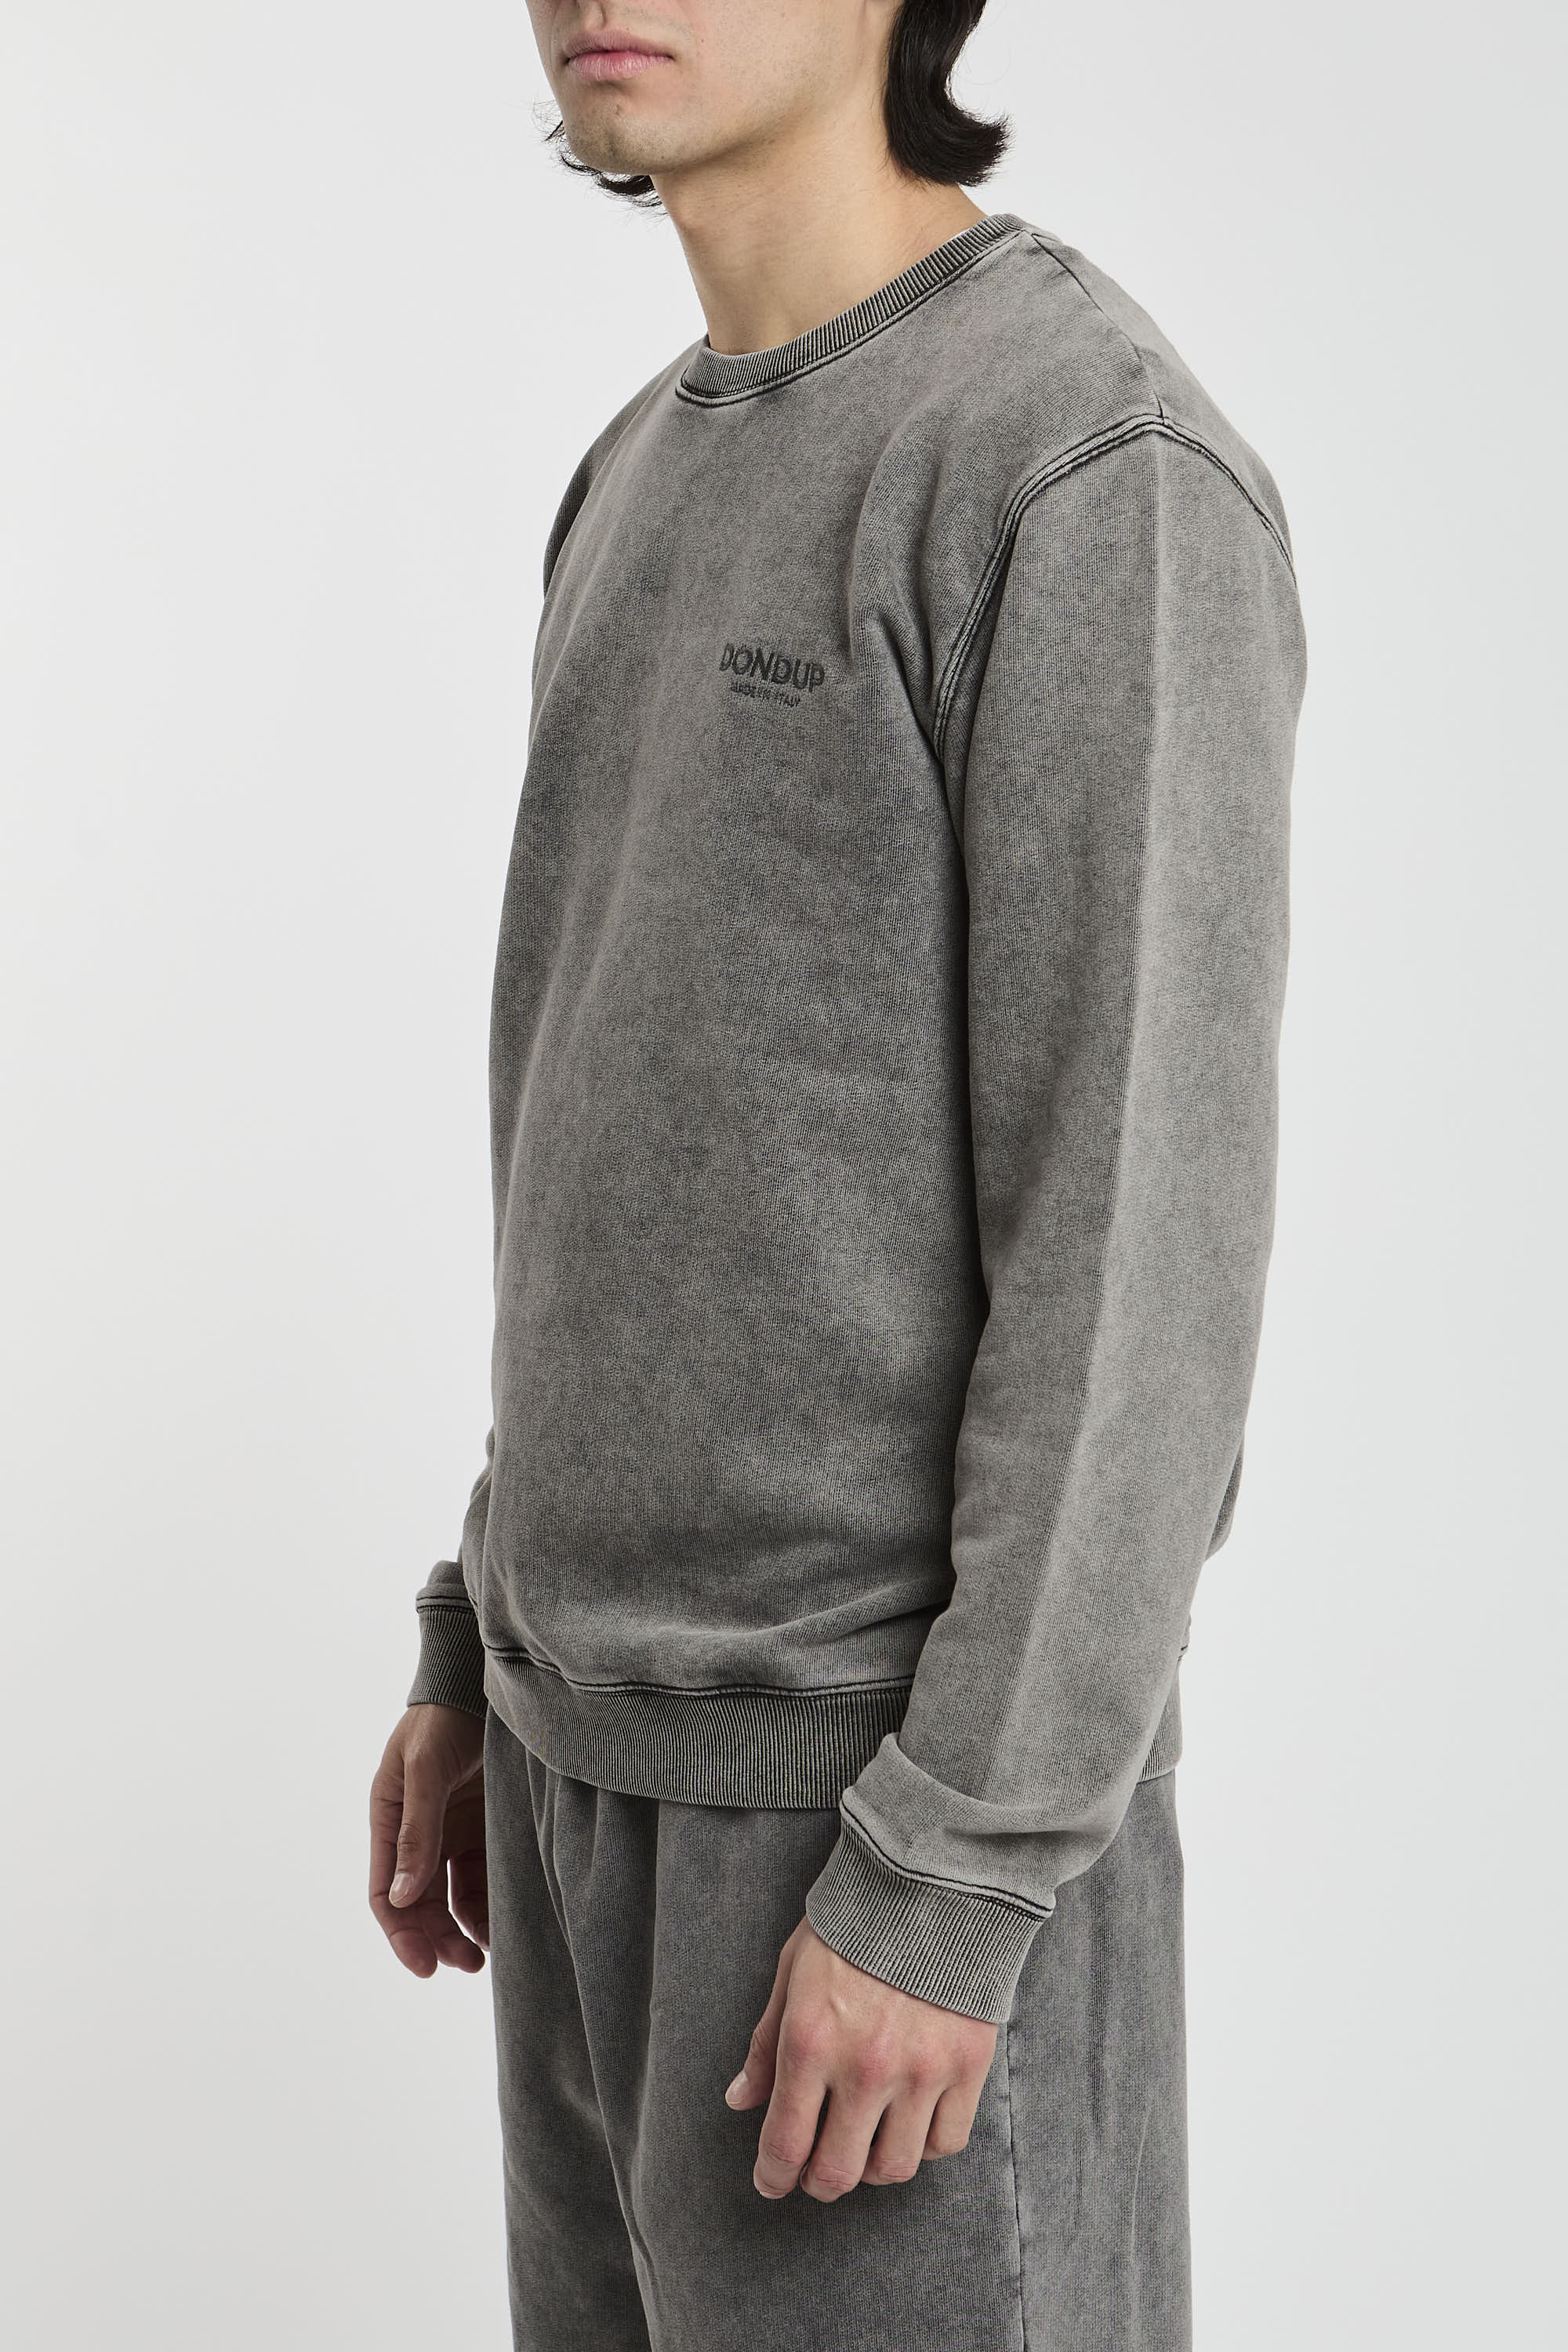 Dondup Cotton Sweatshirt in Grey-4